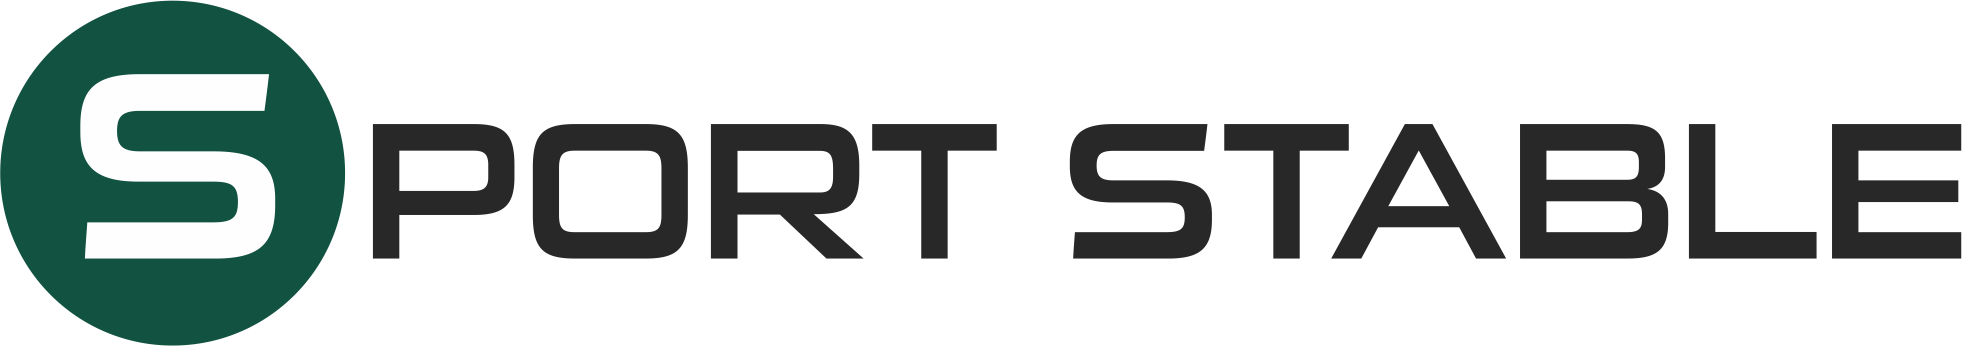 sport-stable-logo